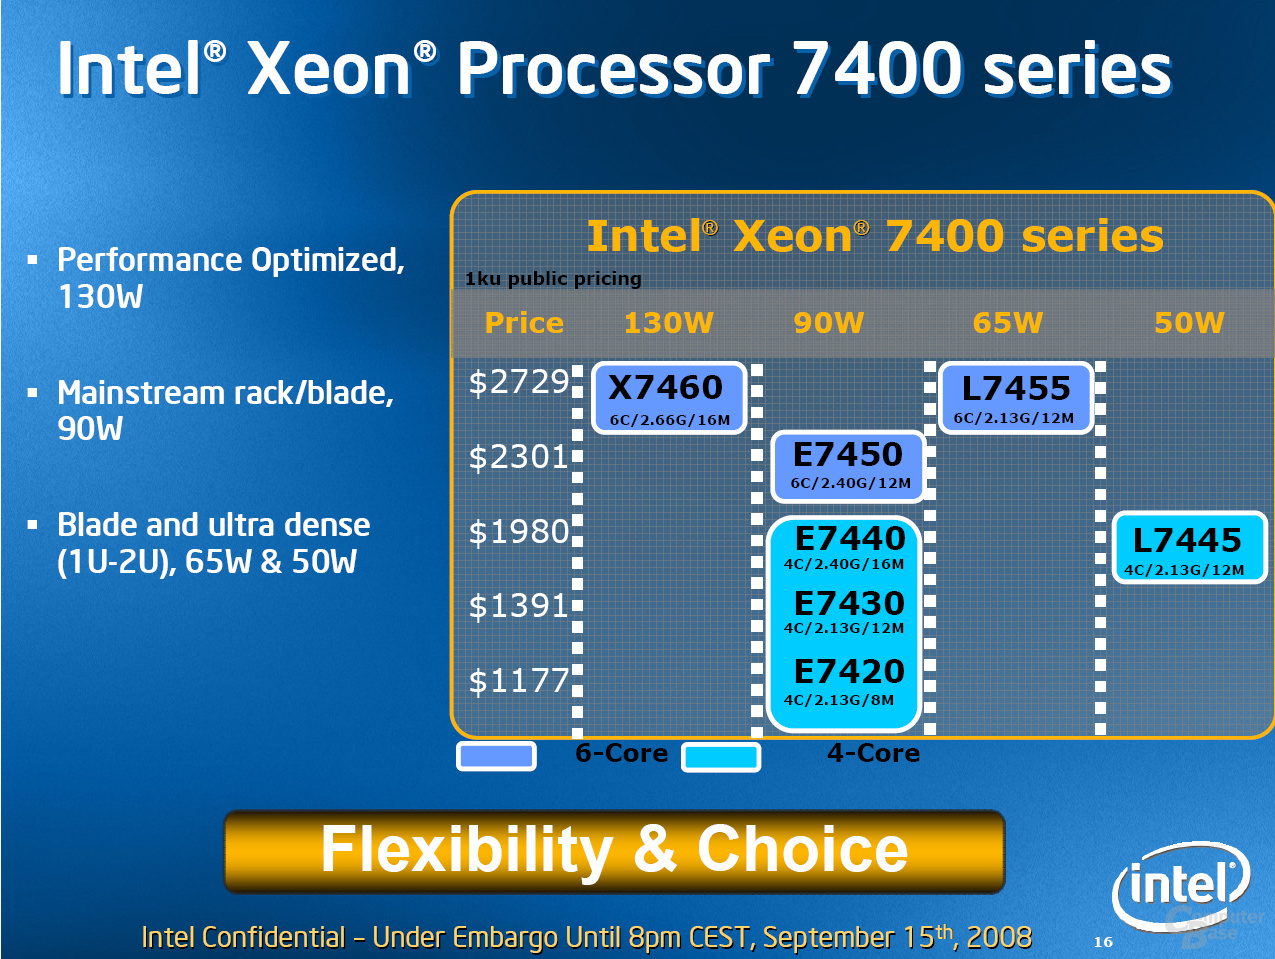 Intel Xeon 7400 Series